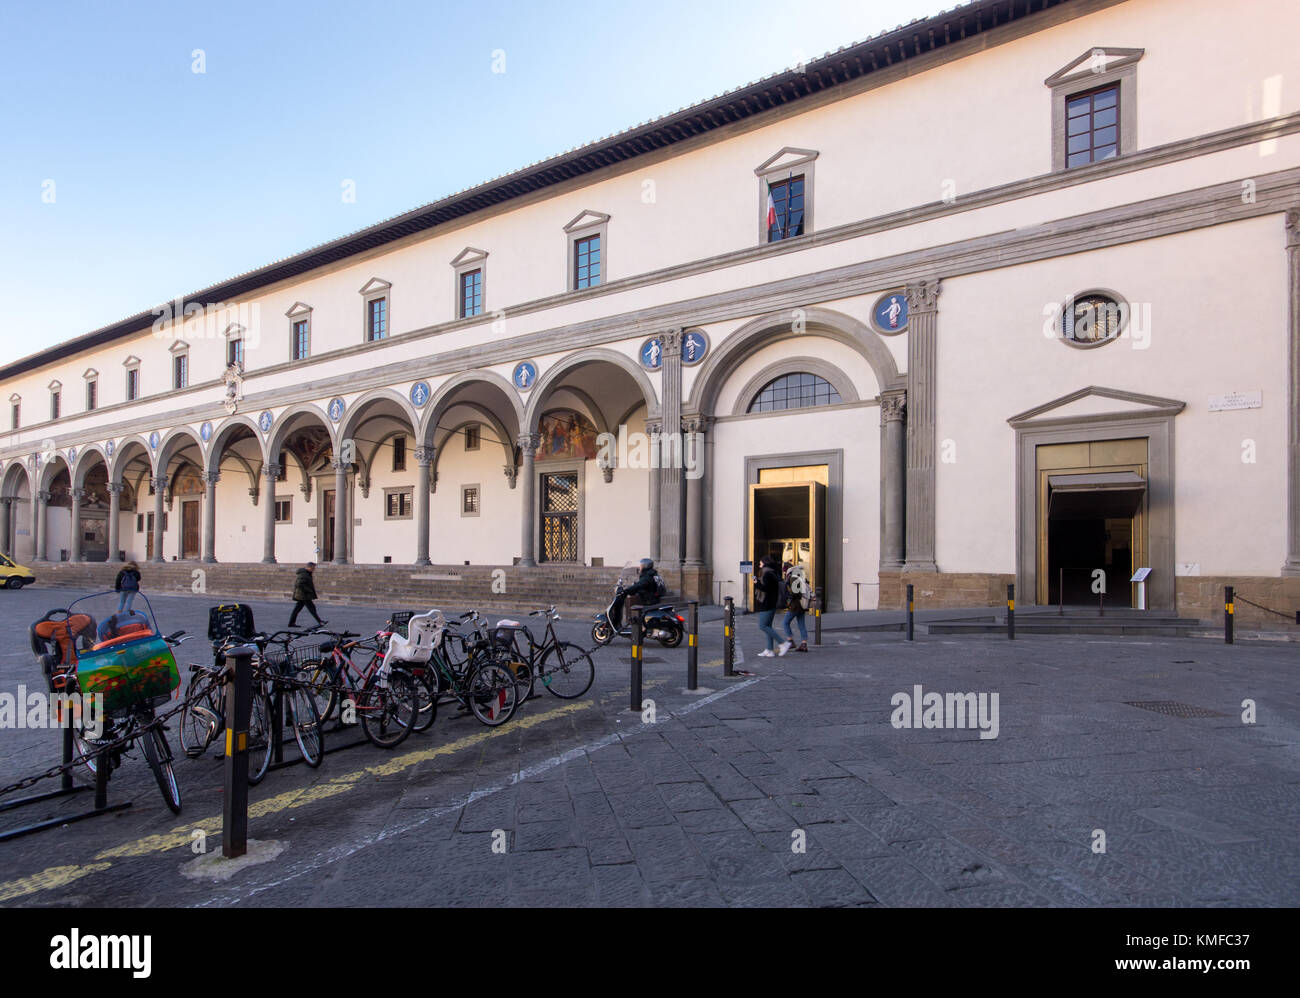 Fiippo Brunelleschi, Ospedale degli Innocenti, 1417-1436, façade & portique, architecture de la Renaissance italienne, musée Museo degli Innocenti, Florence Banque D'Images